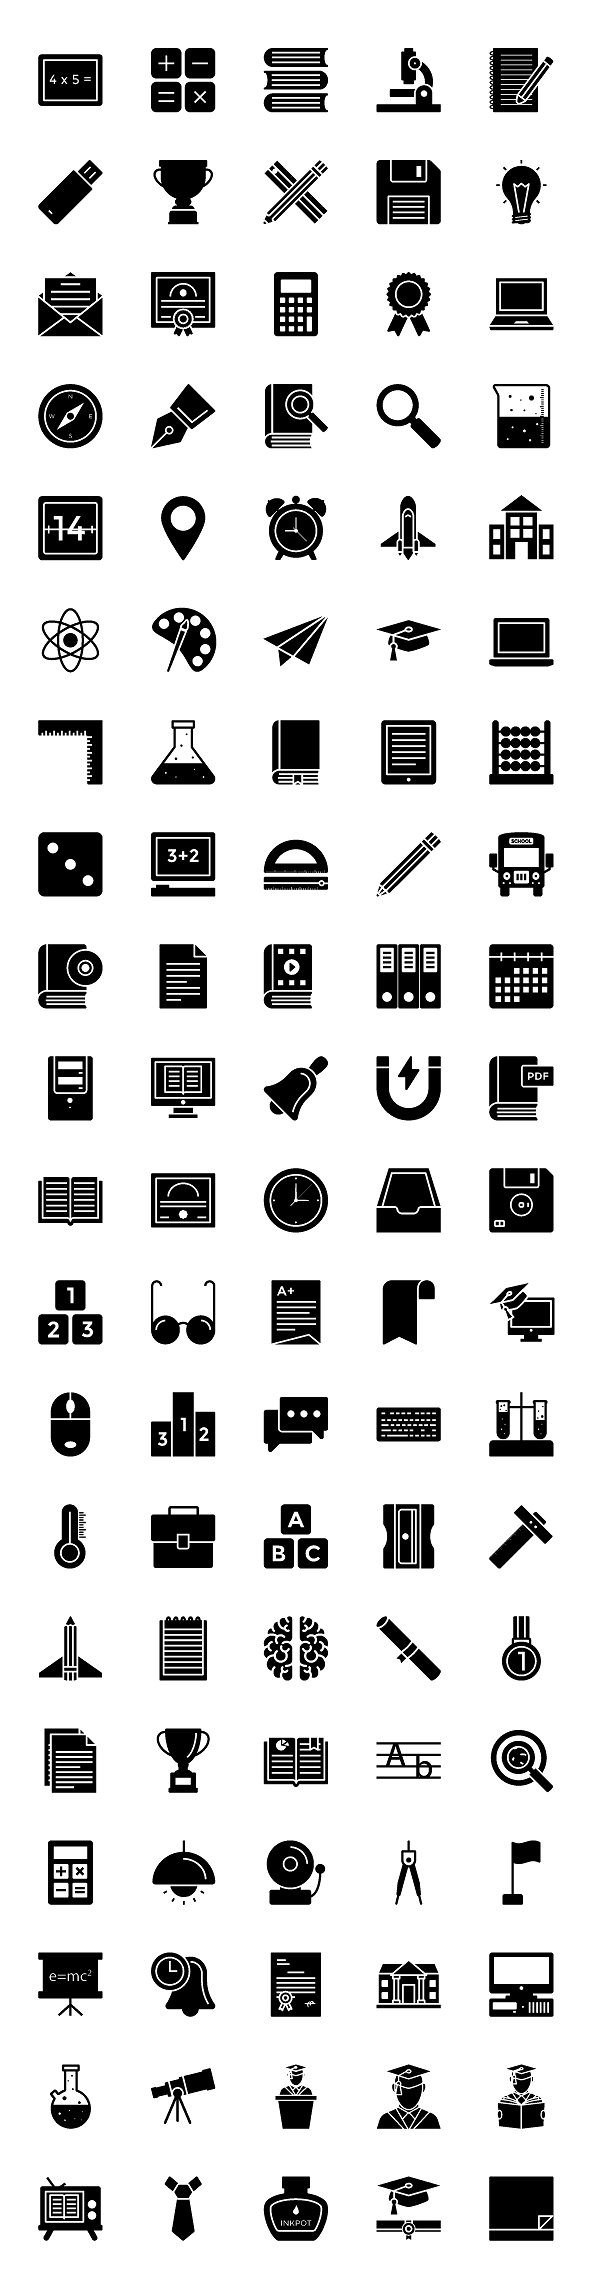 1200枚教育主题图标 Educational 1200 Icons Bundle Pack插图(7)